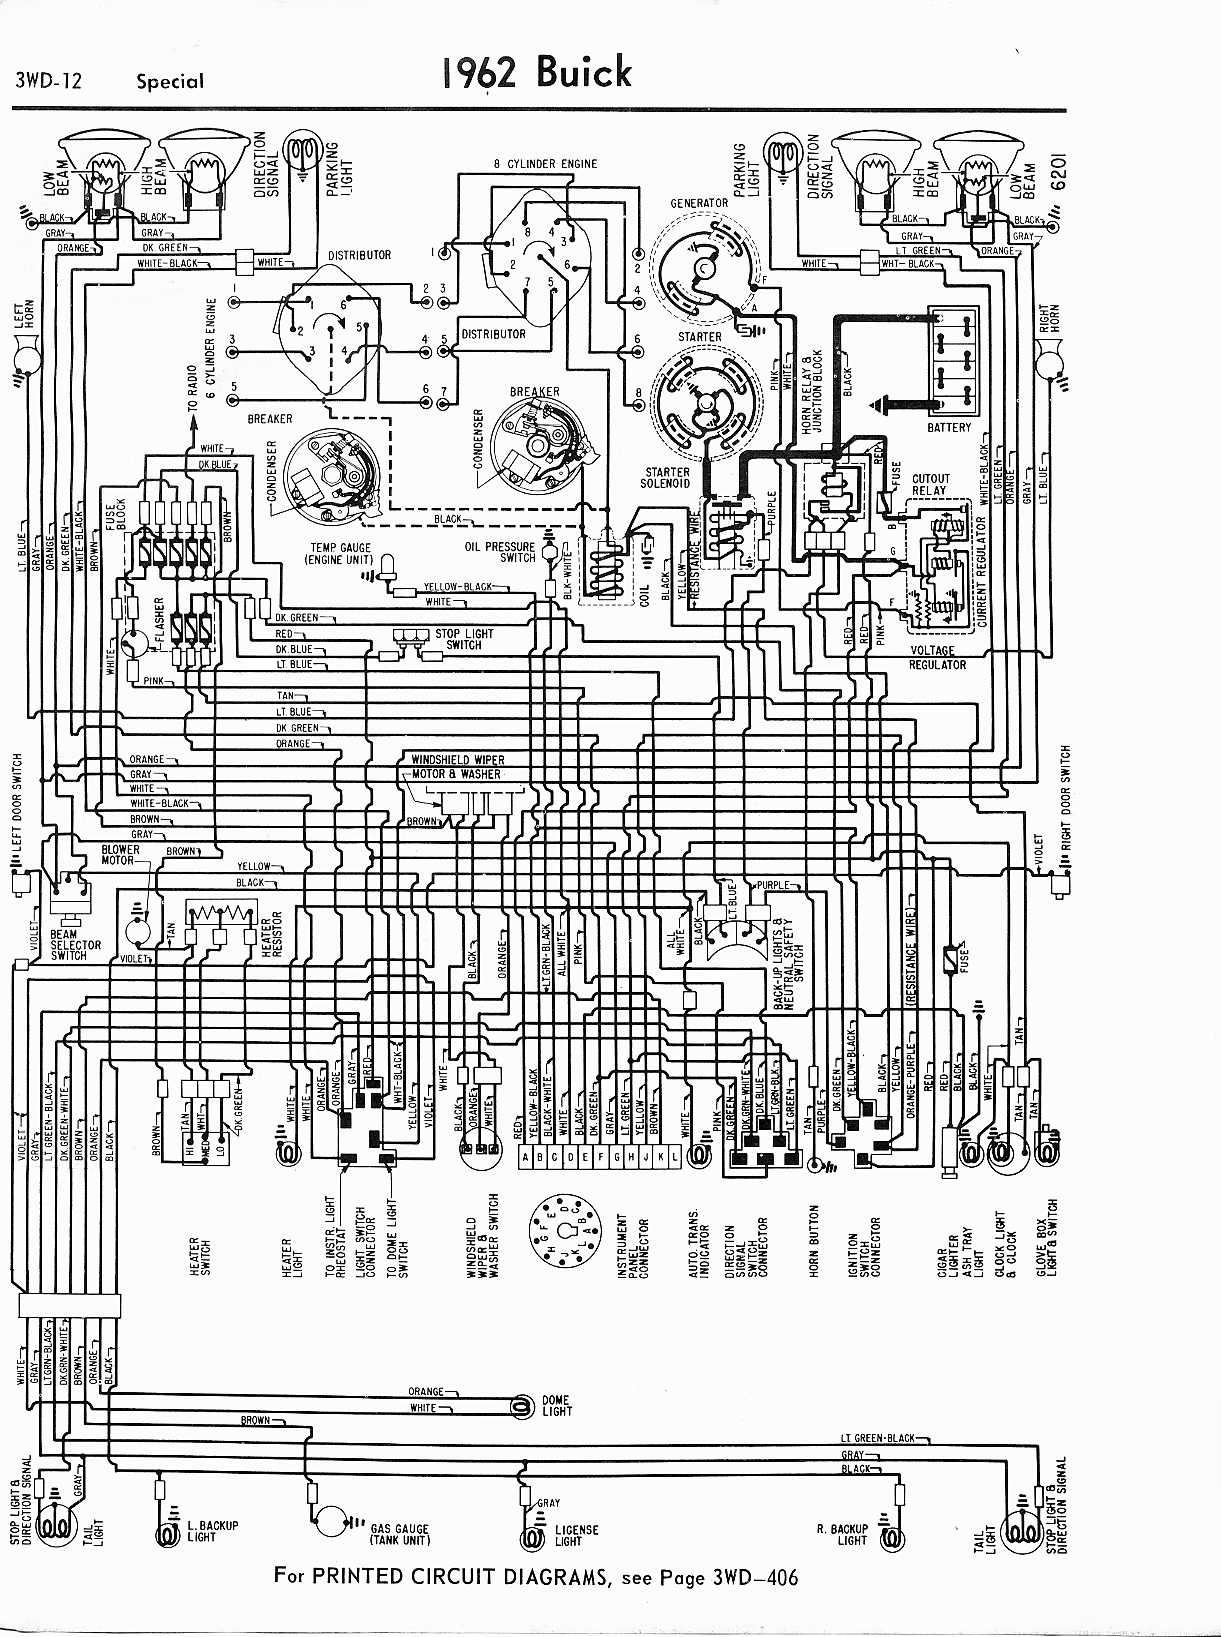 Buick Wiring Diagrams: 1957-1965 1959 buick lesabre wiring diagram 